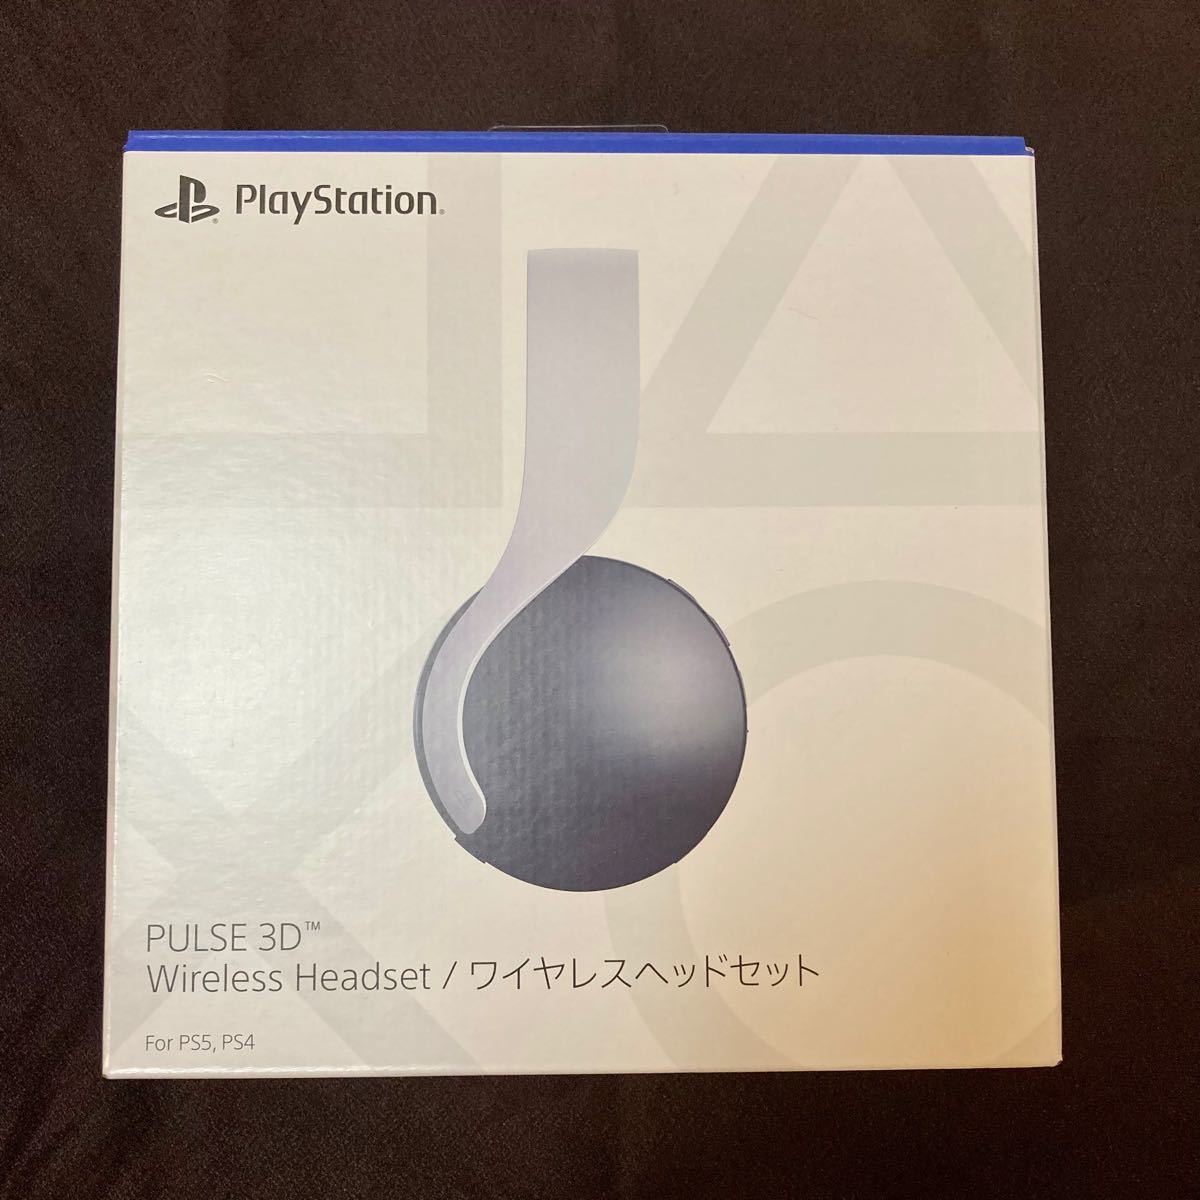 PULSE 3D ワイヤレスヘッドセット (CFI-ZWH1J) PlayStation 5 PS5 